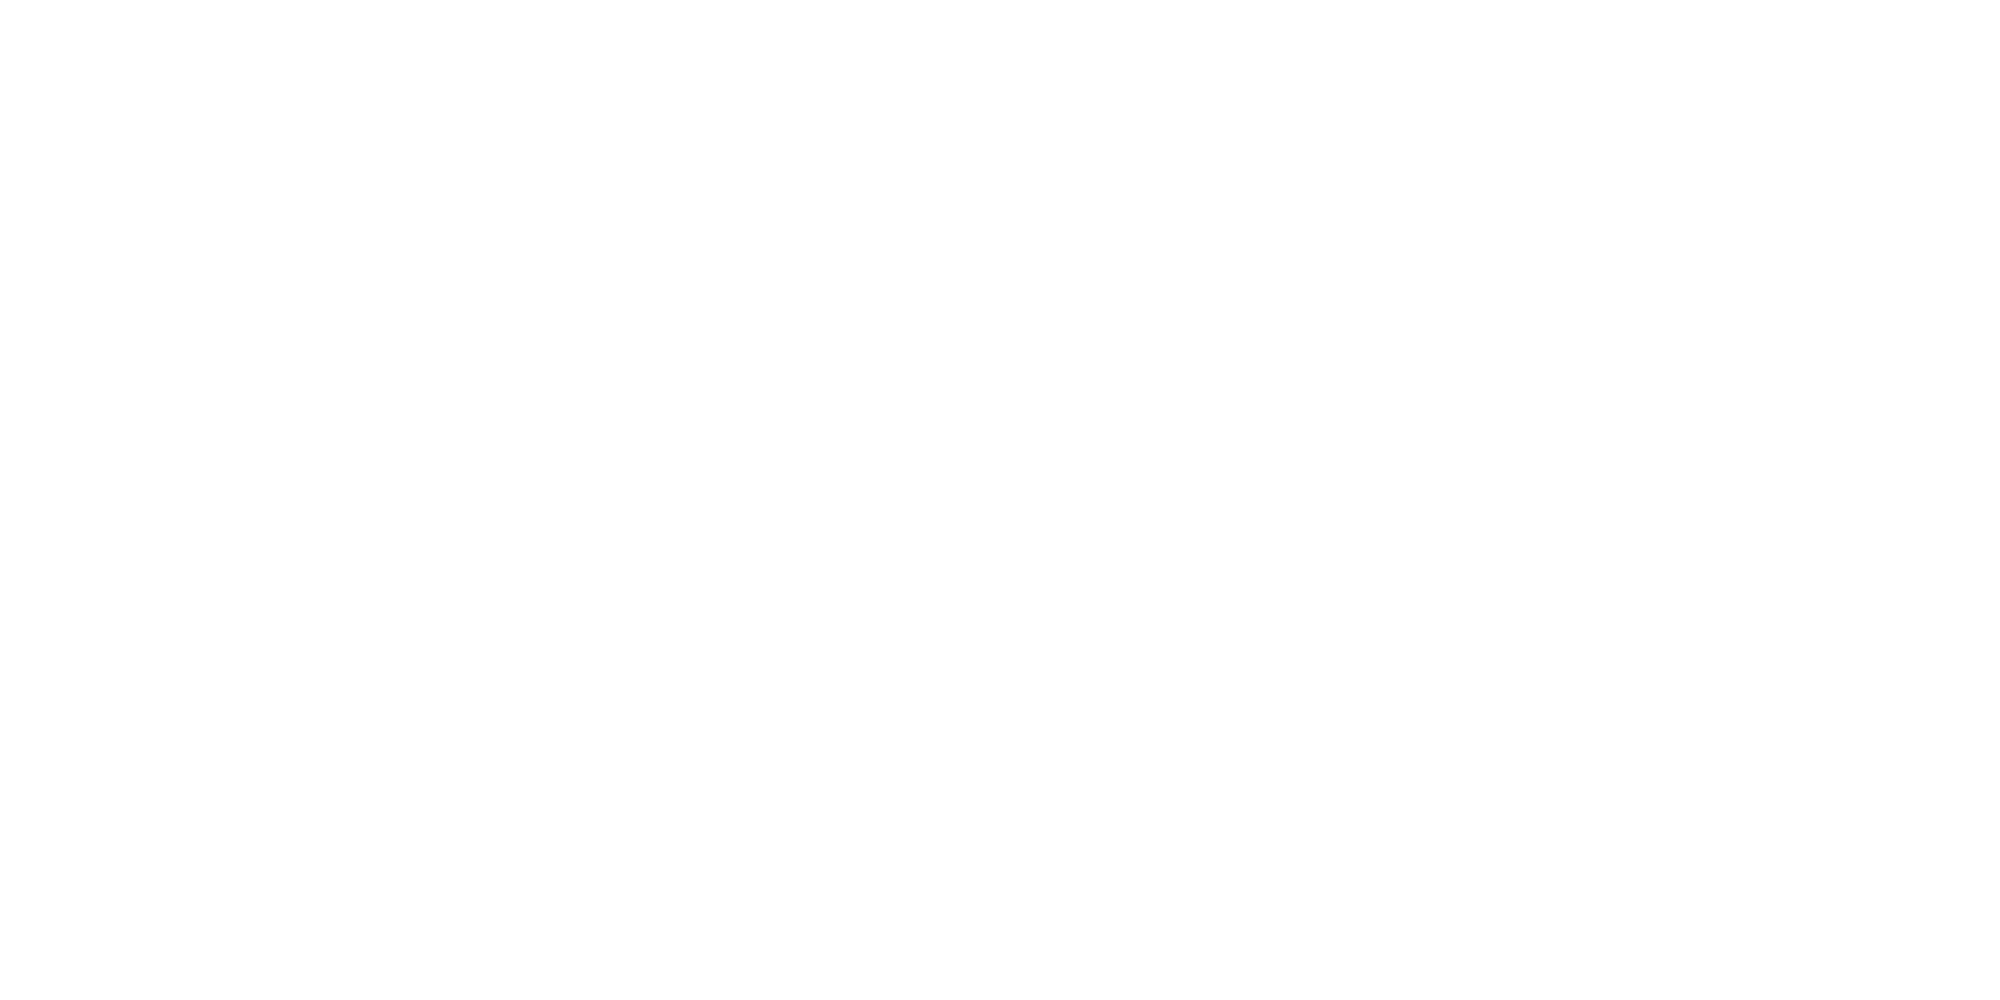 Fish on Fridays